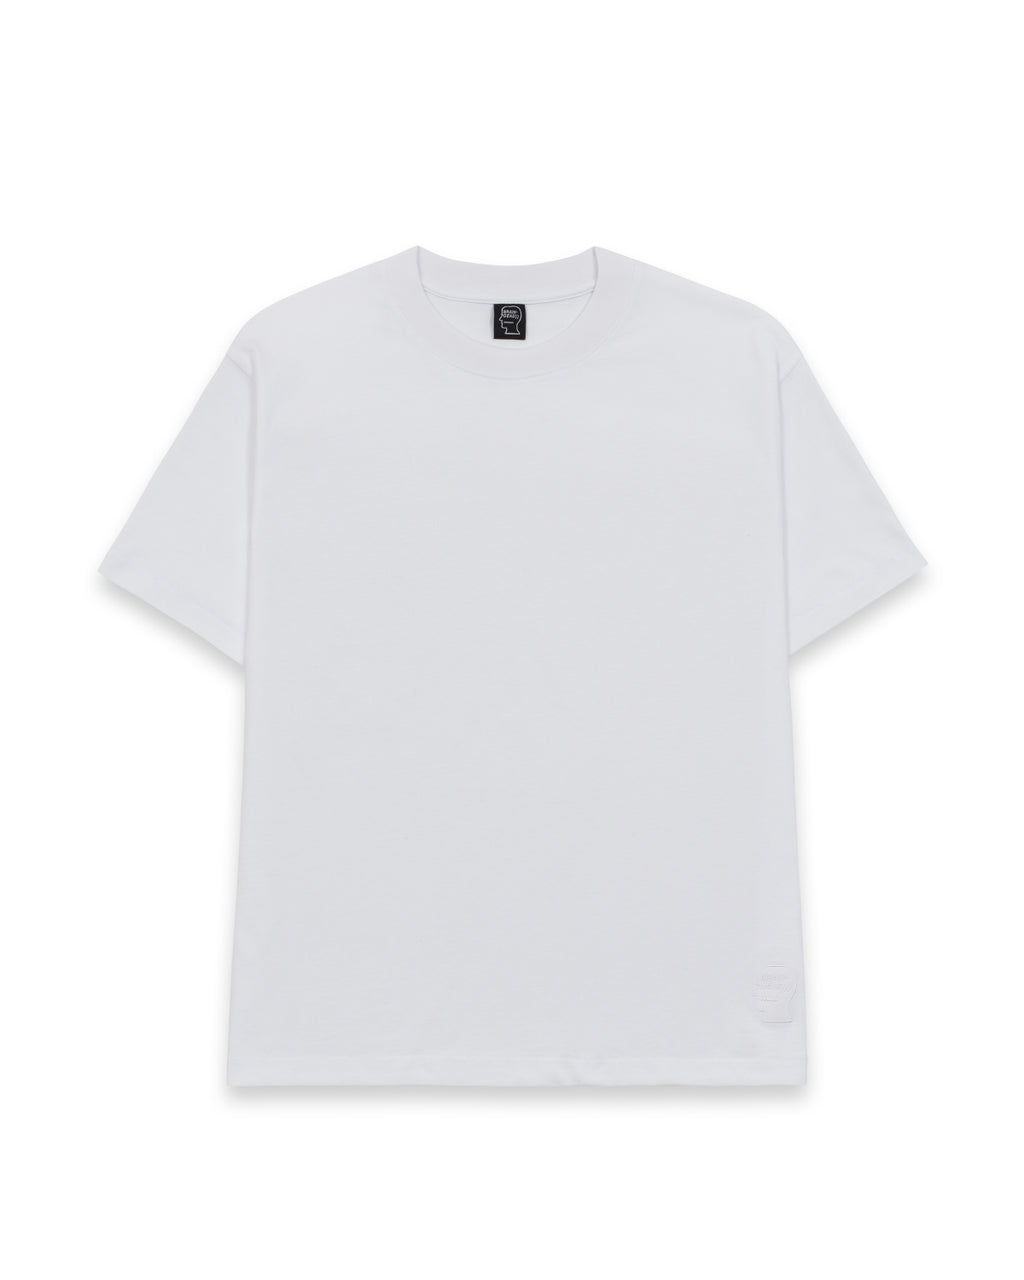 Easy Shirt - White